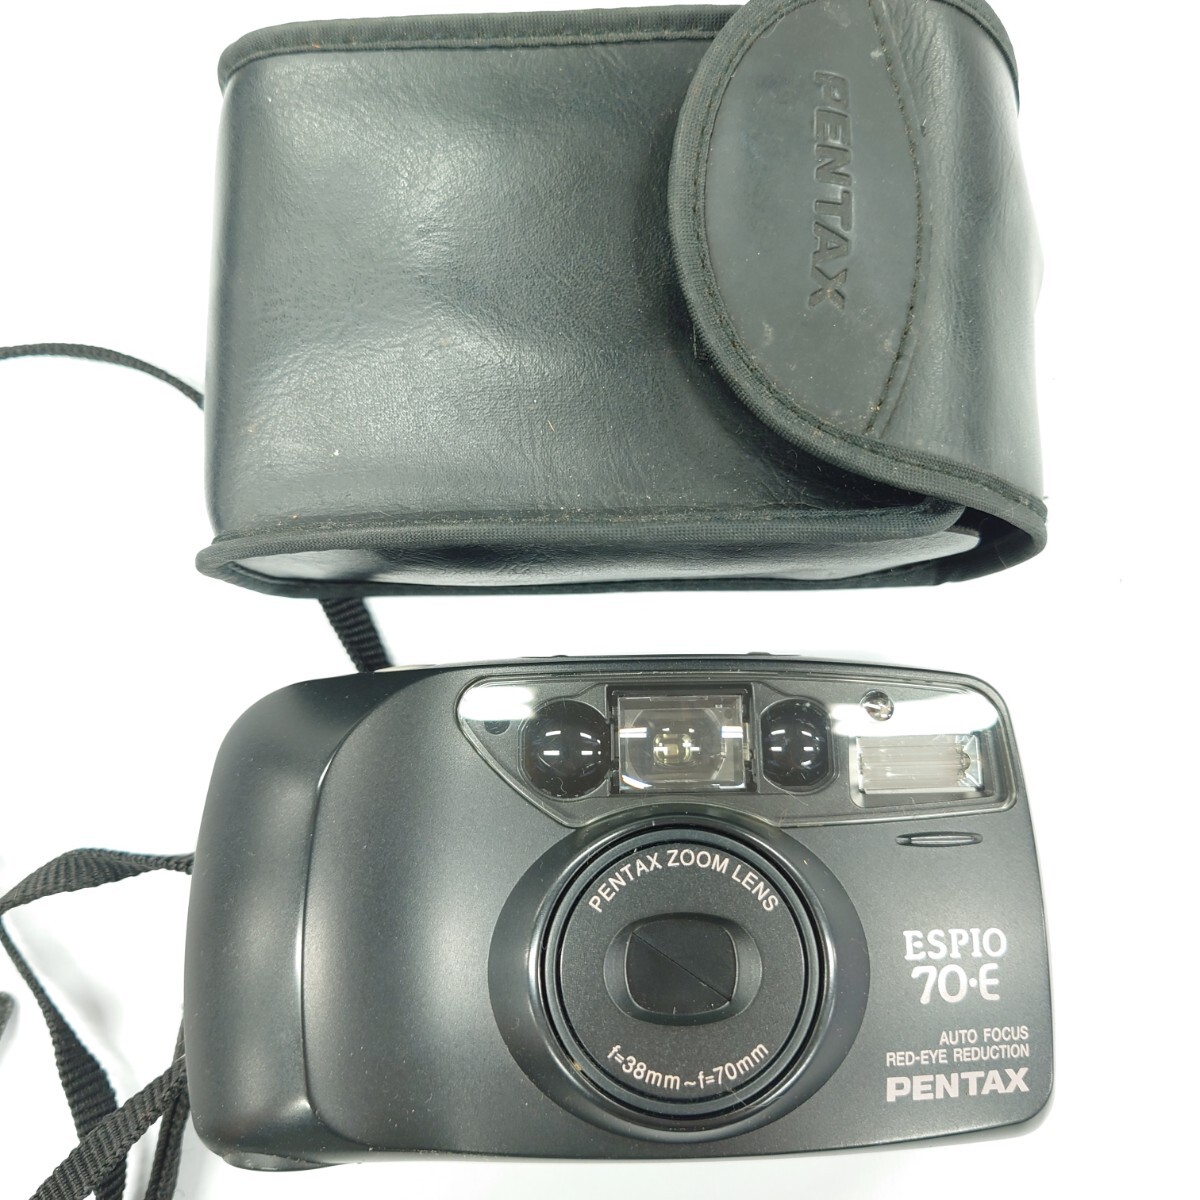 I808 フィルムカメラ PENTAX ESPIO 70-E AUTO FOCUS RED-EYE REDUCTION PENTAX ZOOM LENS f=38mm-70mm カメラ 中古 ジャンク品 訳ありの画像1